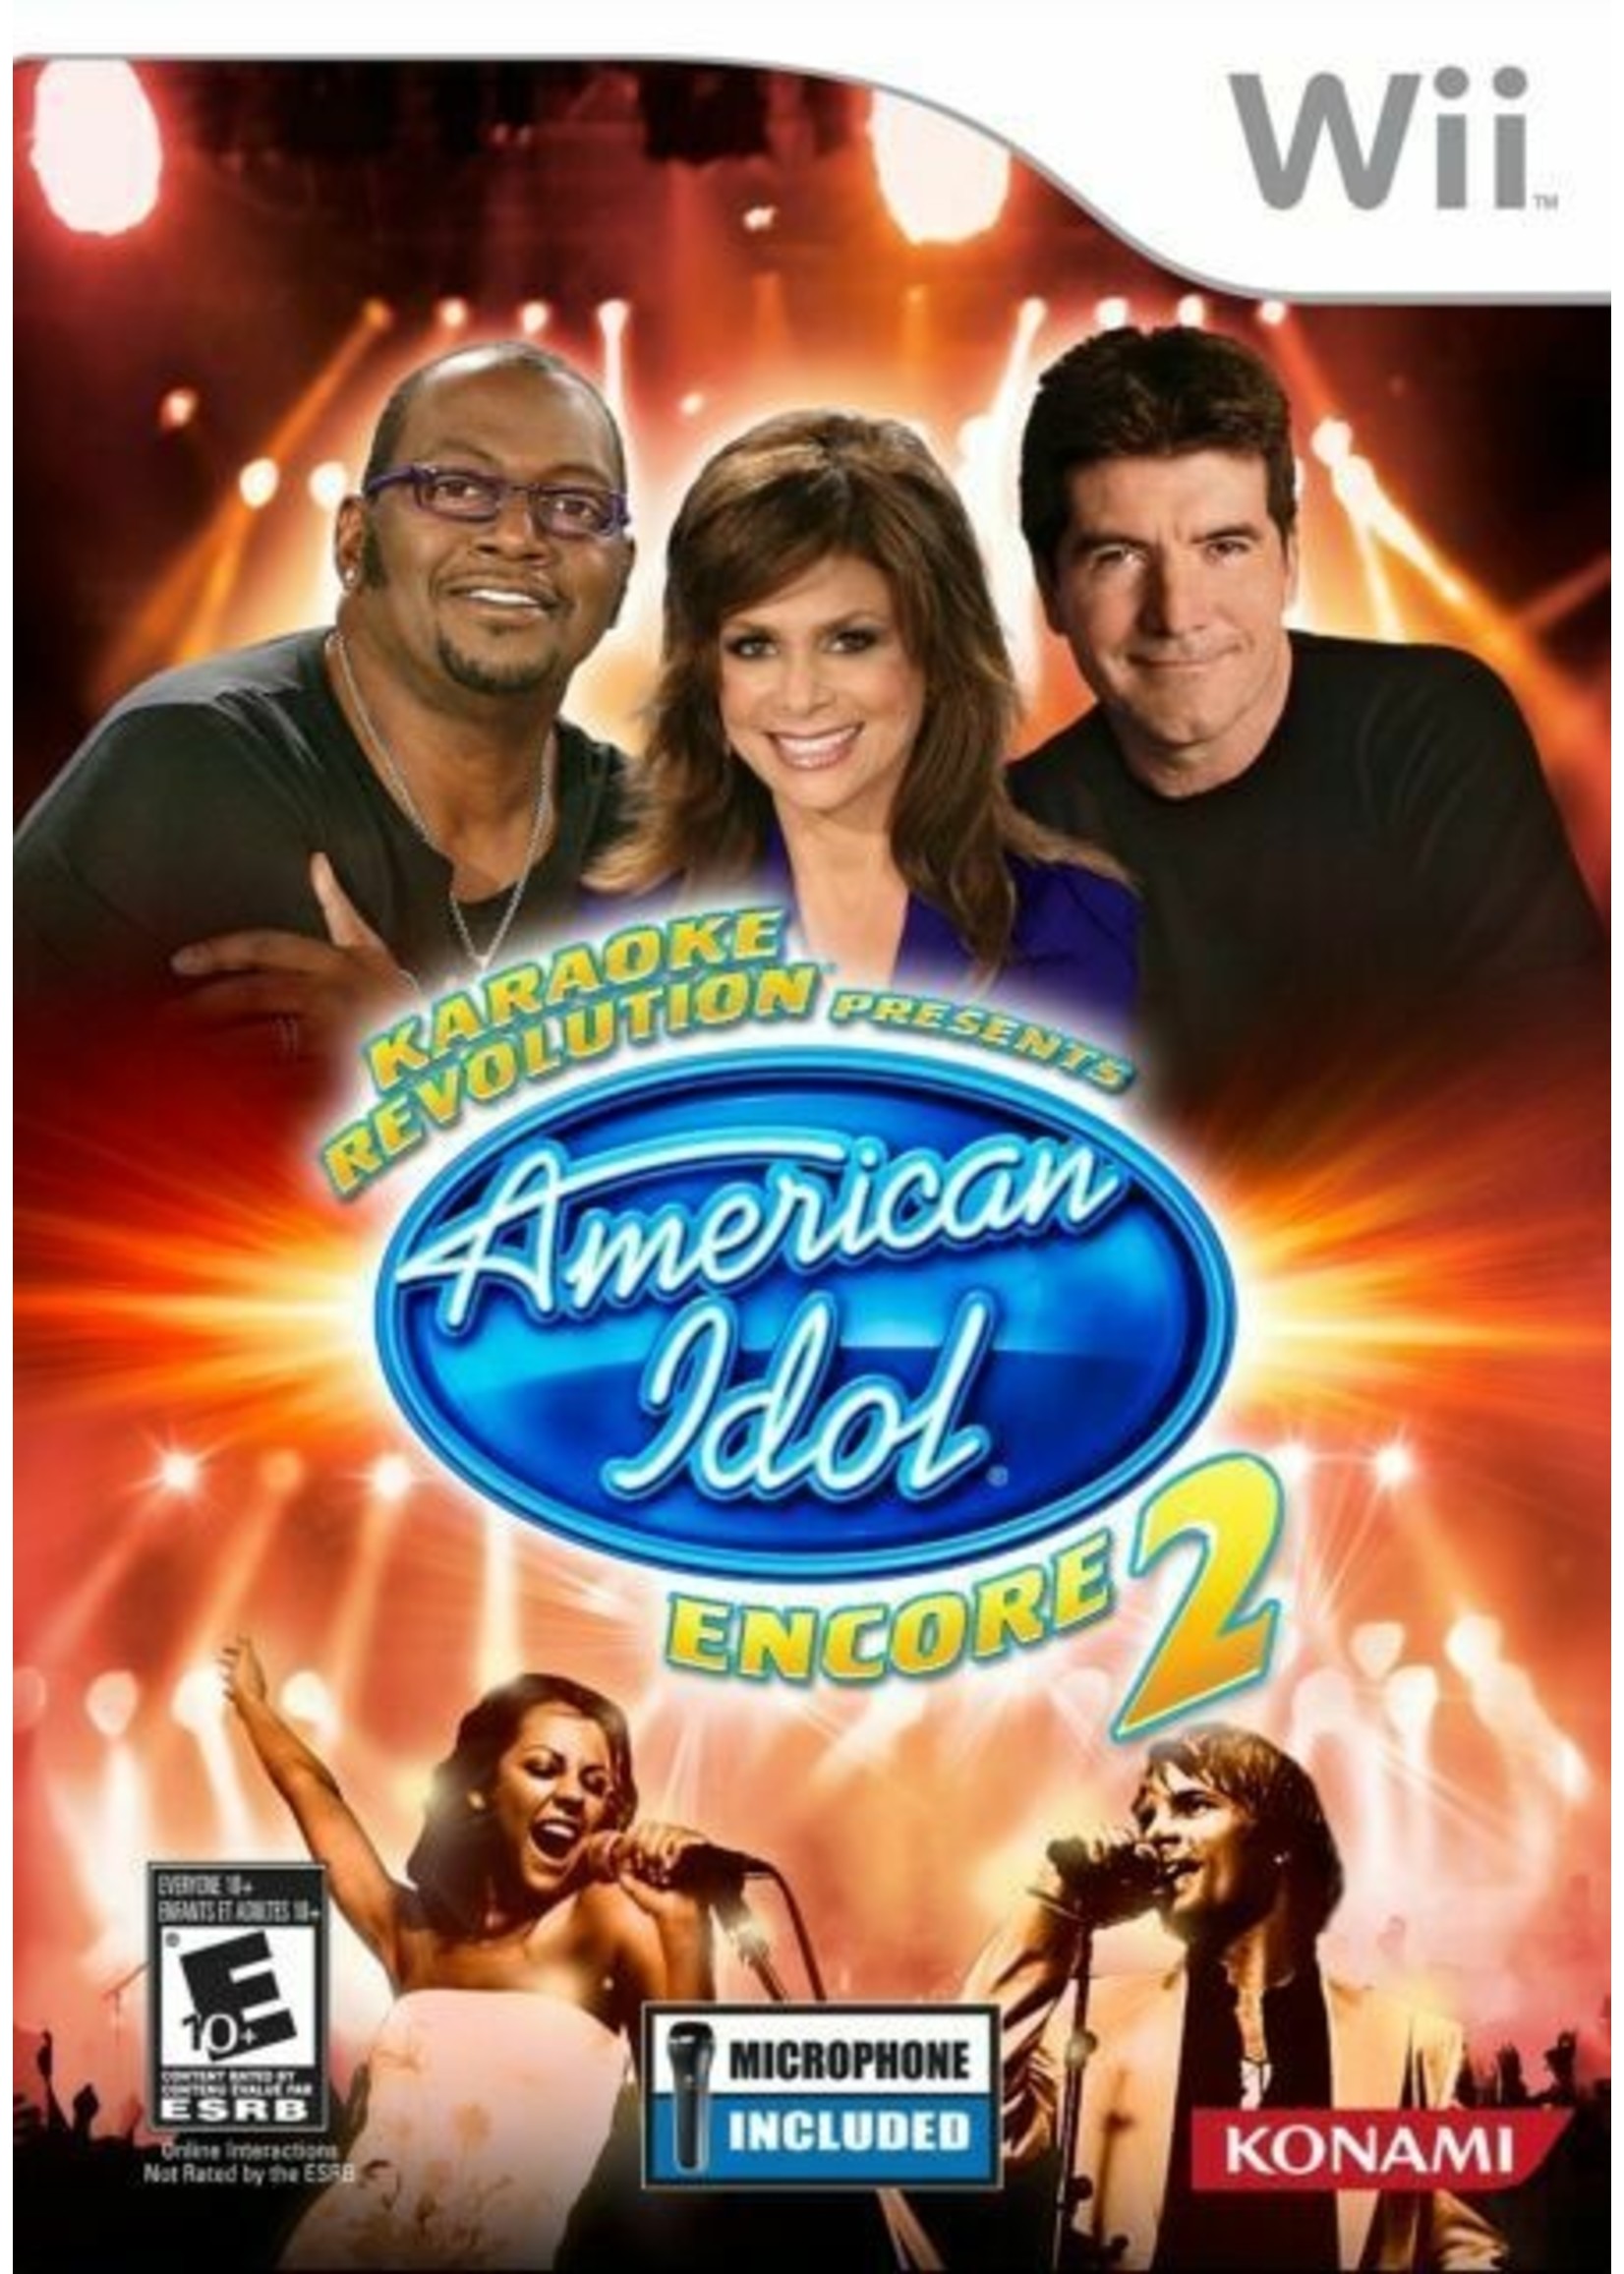 Nintendo Wii Karaoke Revolution American Idol Encore 2